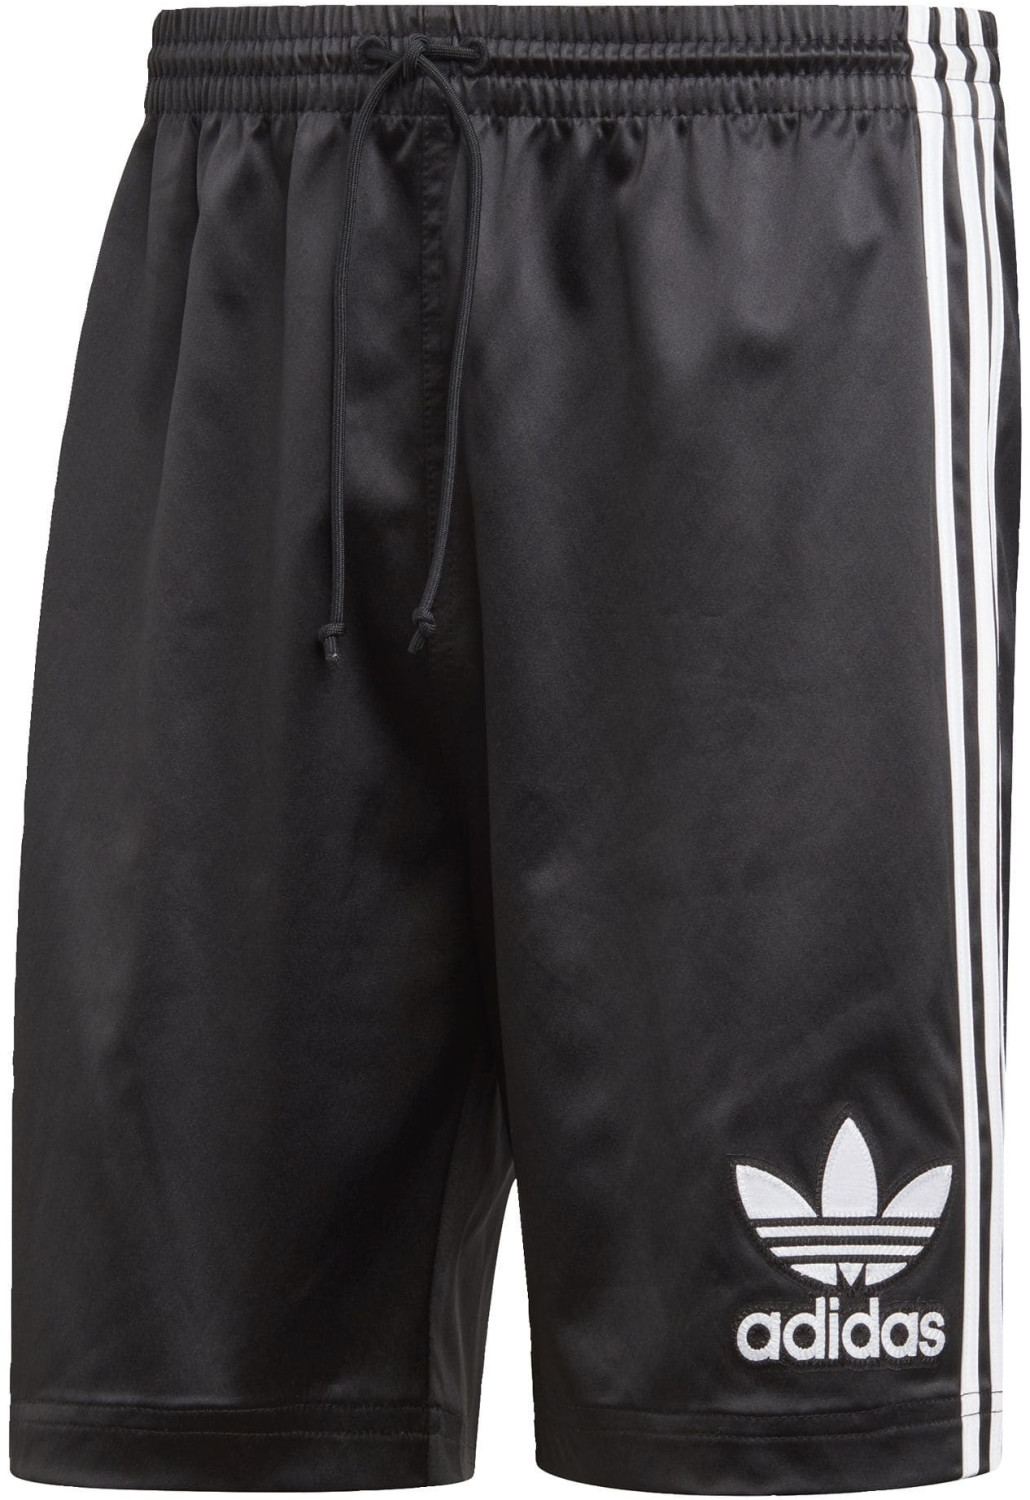 Adidas Shorts (Satin) black/white